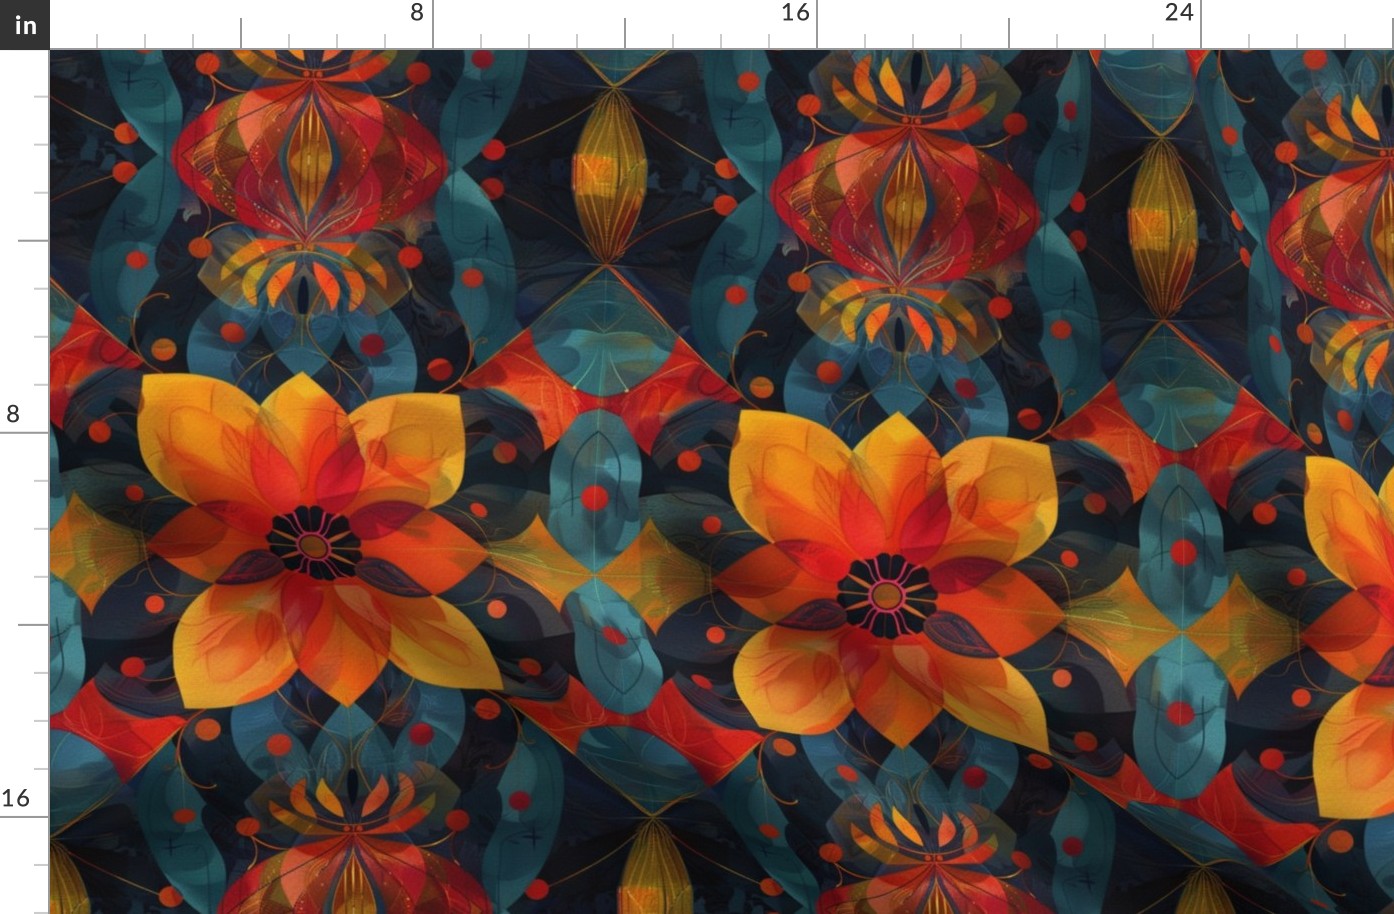 Simultaneism Art Transuscent Layers Rich Colors Floral